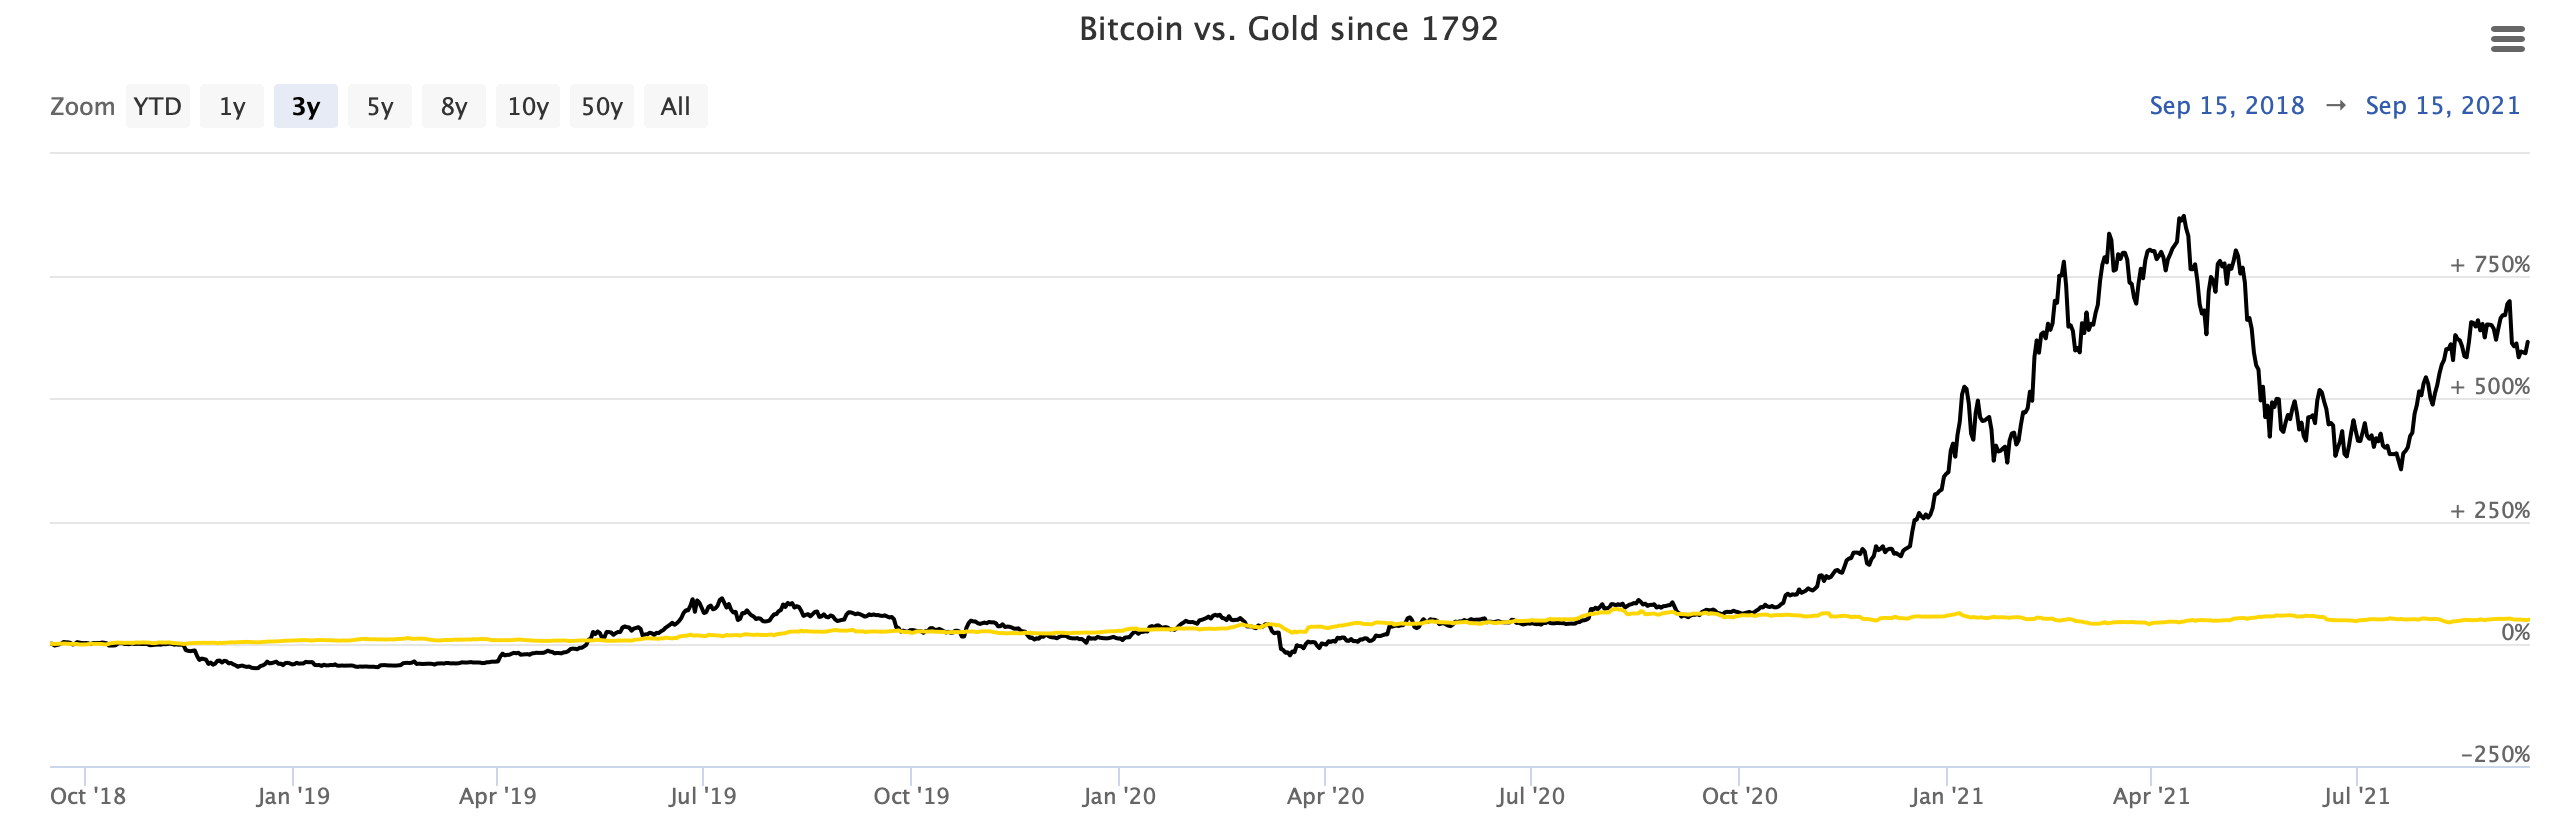 биткоин золото криптовалюта блокчейн